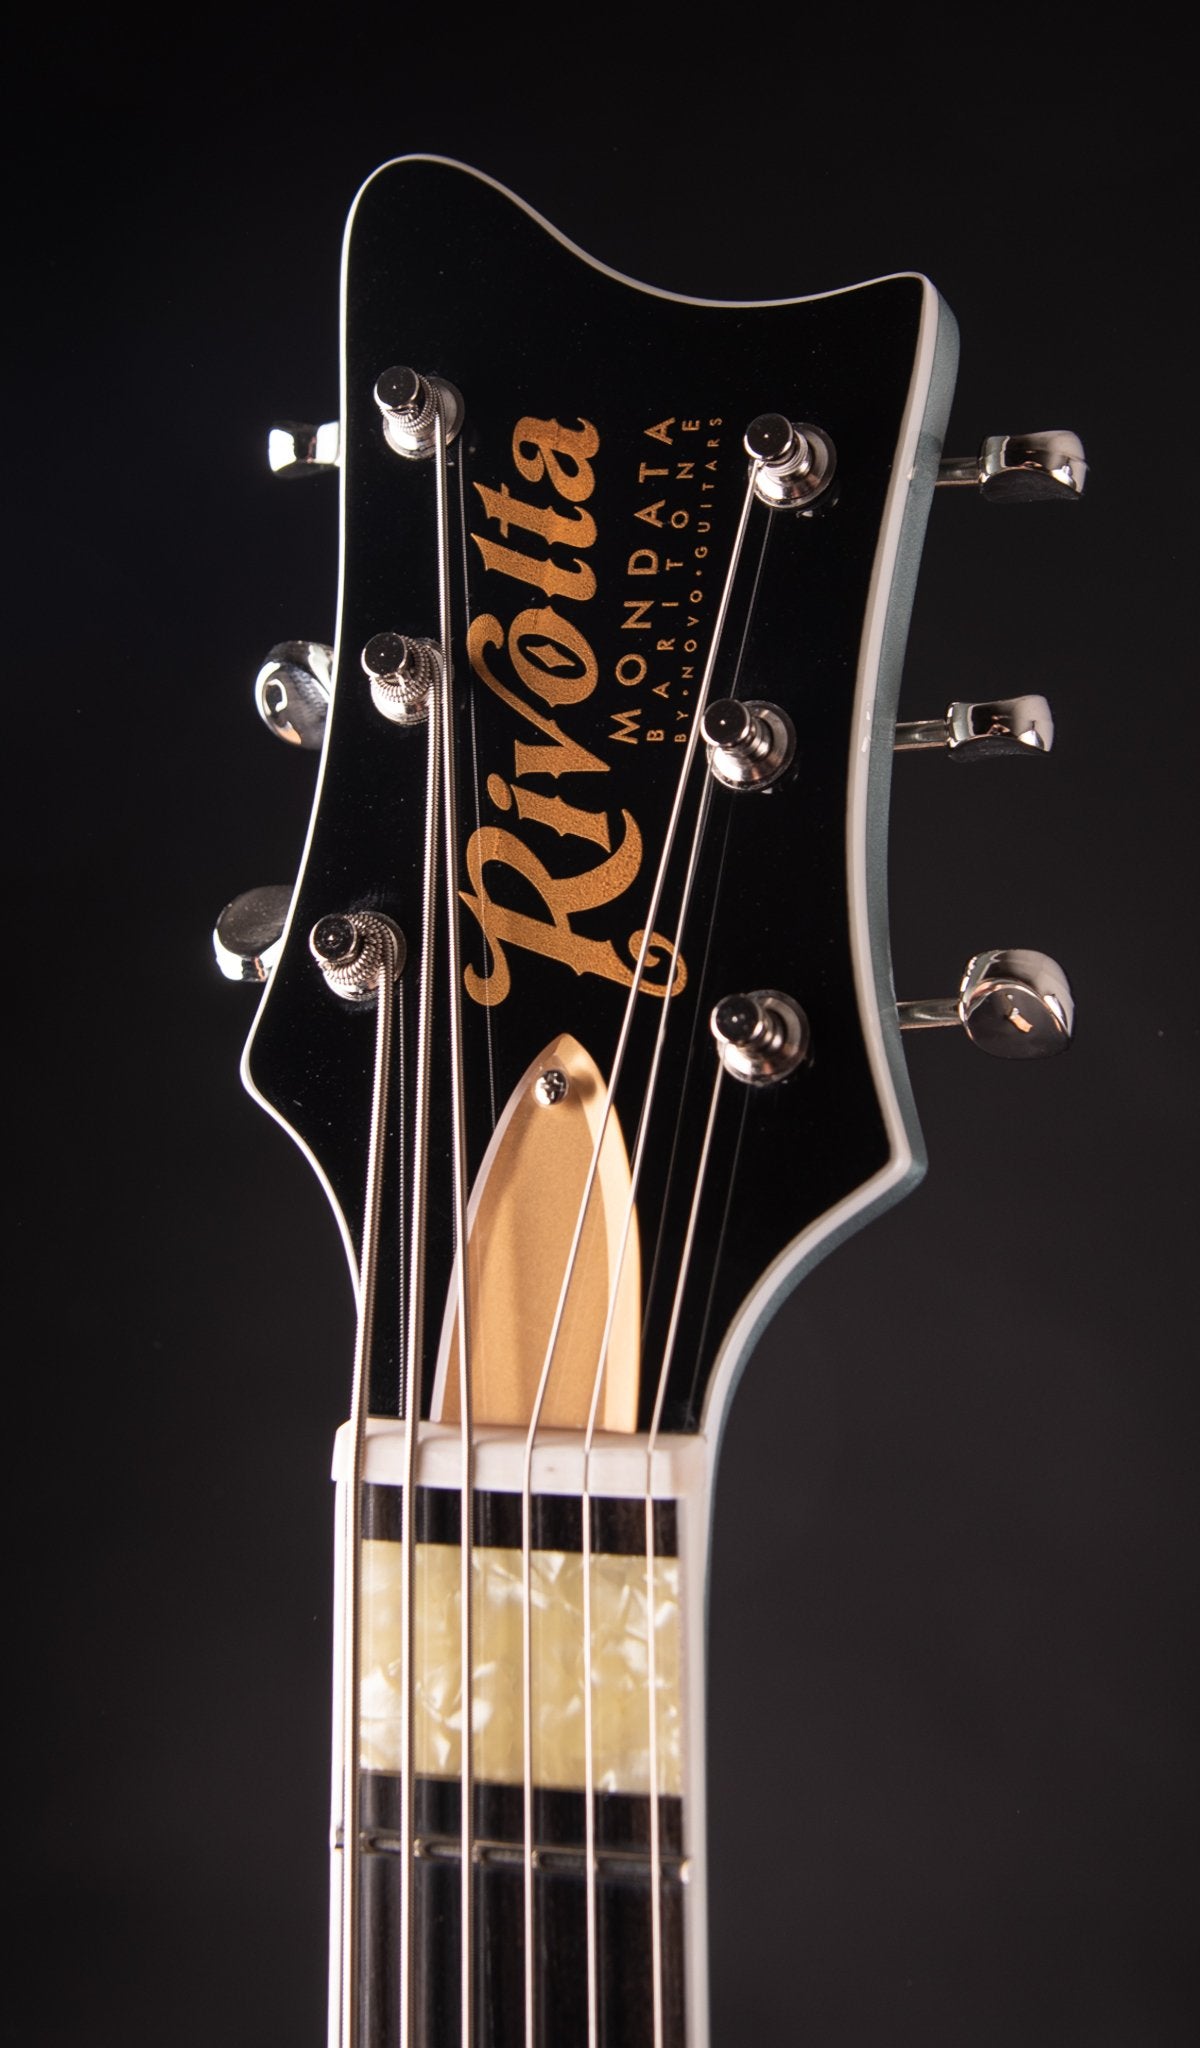 Eastwood Guitars Rivolta Mondata Baritone VIII Ice Blue Metallic